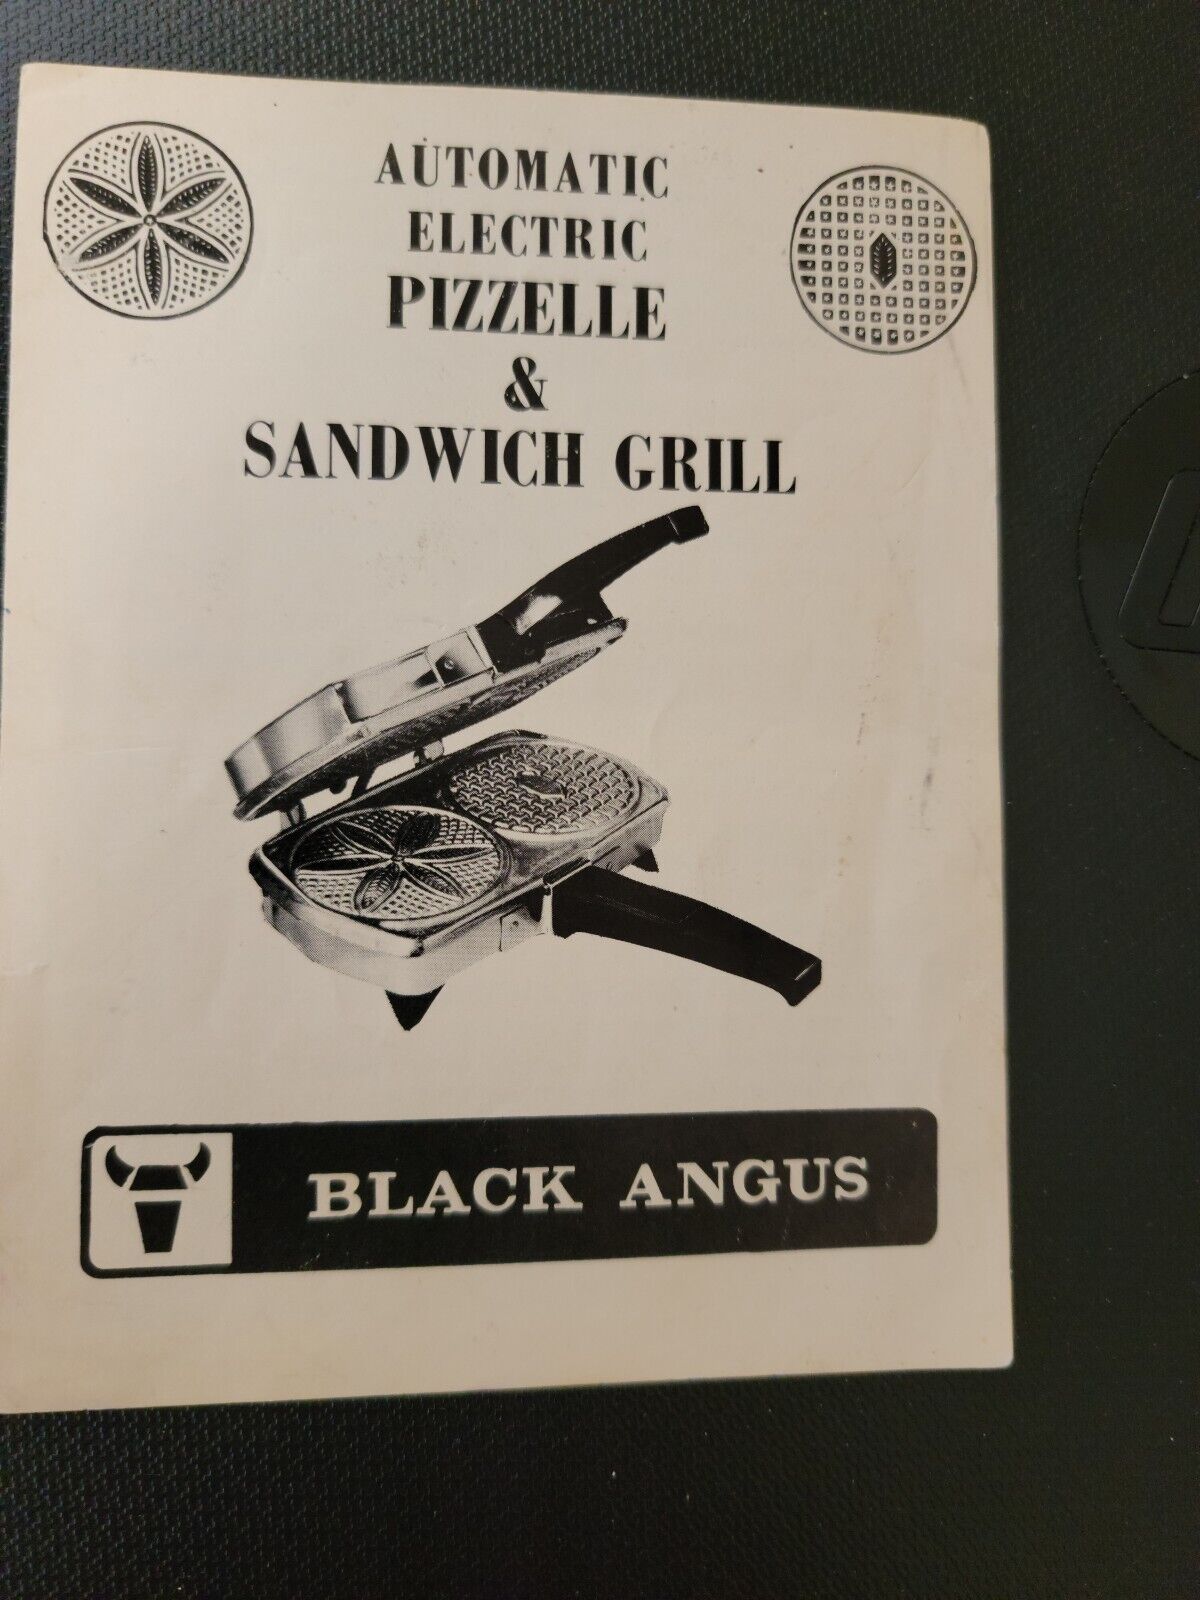 RARE Black Angus Pizzelle Maker Copy of Manual & Recipes